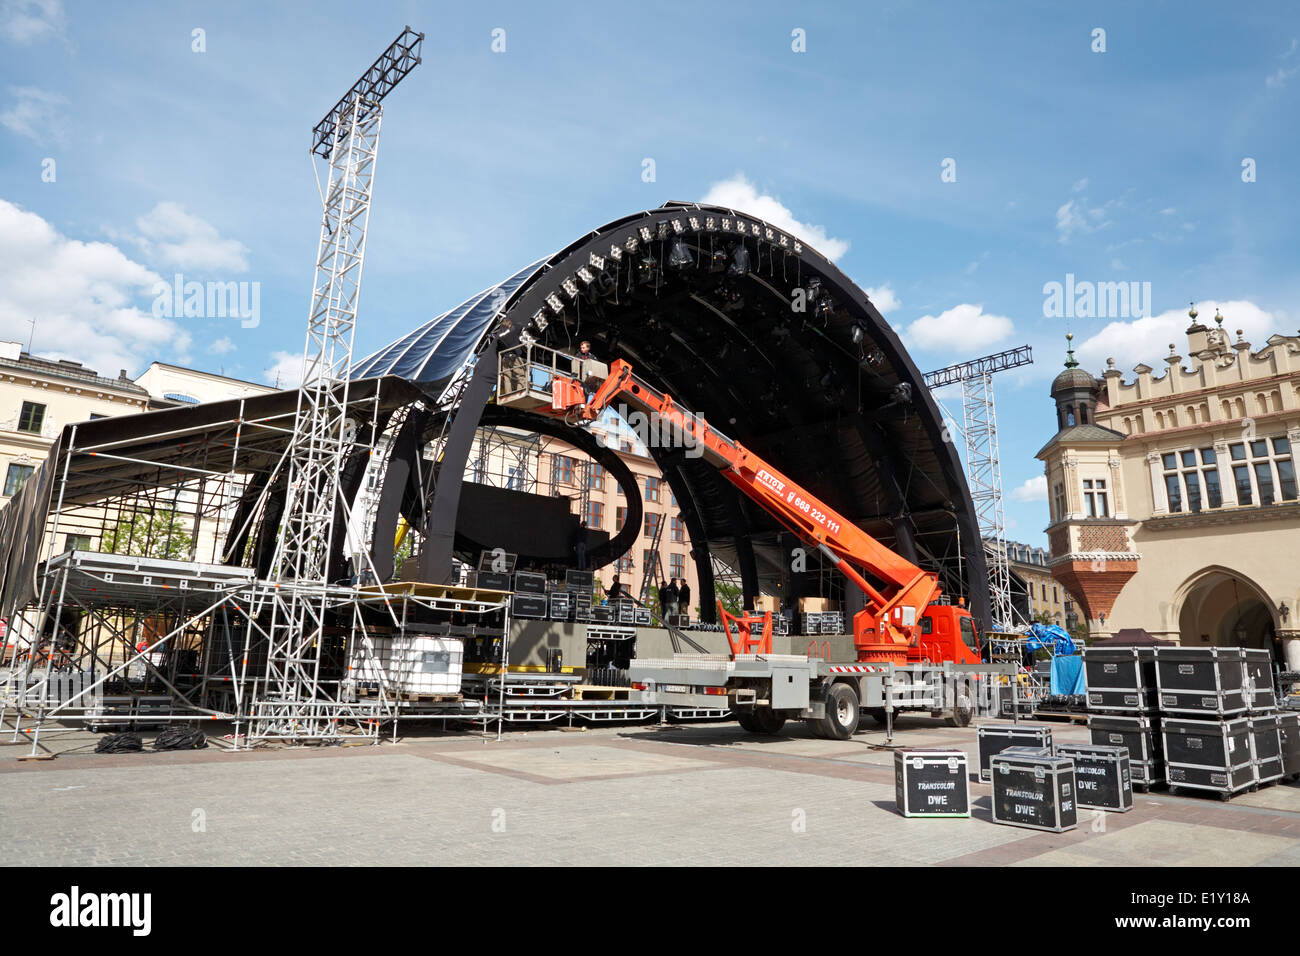 Concert Stage Construction Krakow Poland Main Square Stock Photo